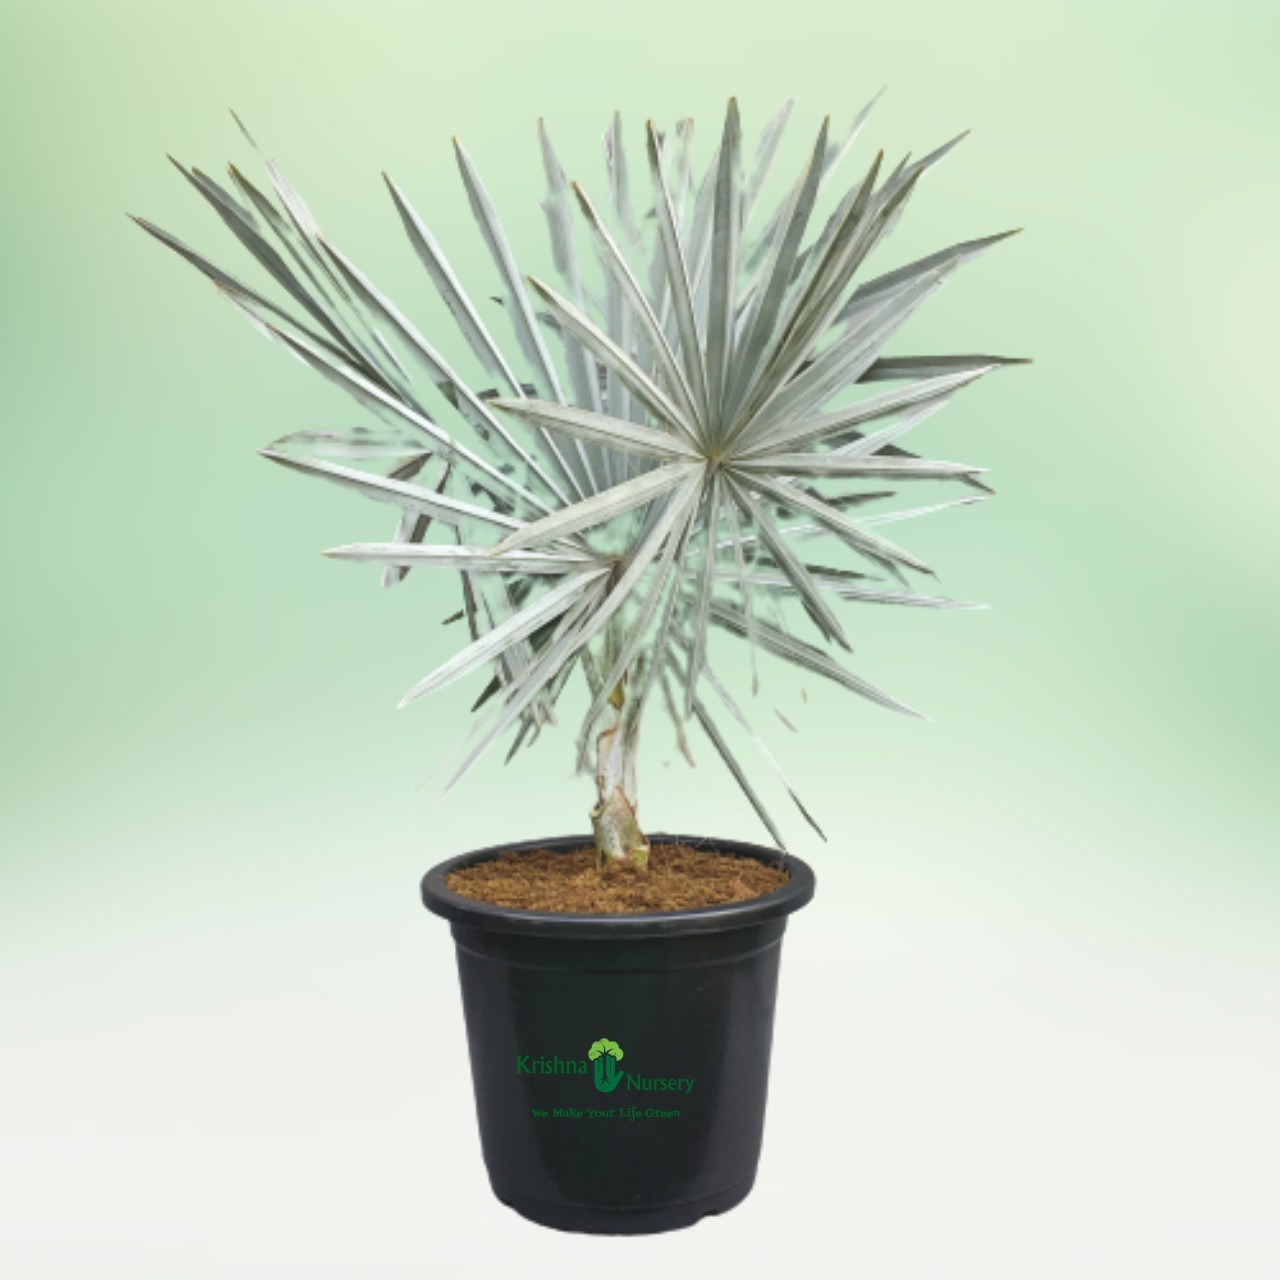 Bismarckia Palm - 18 Inch - Black Pot